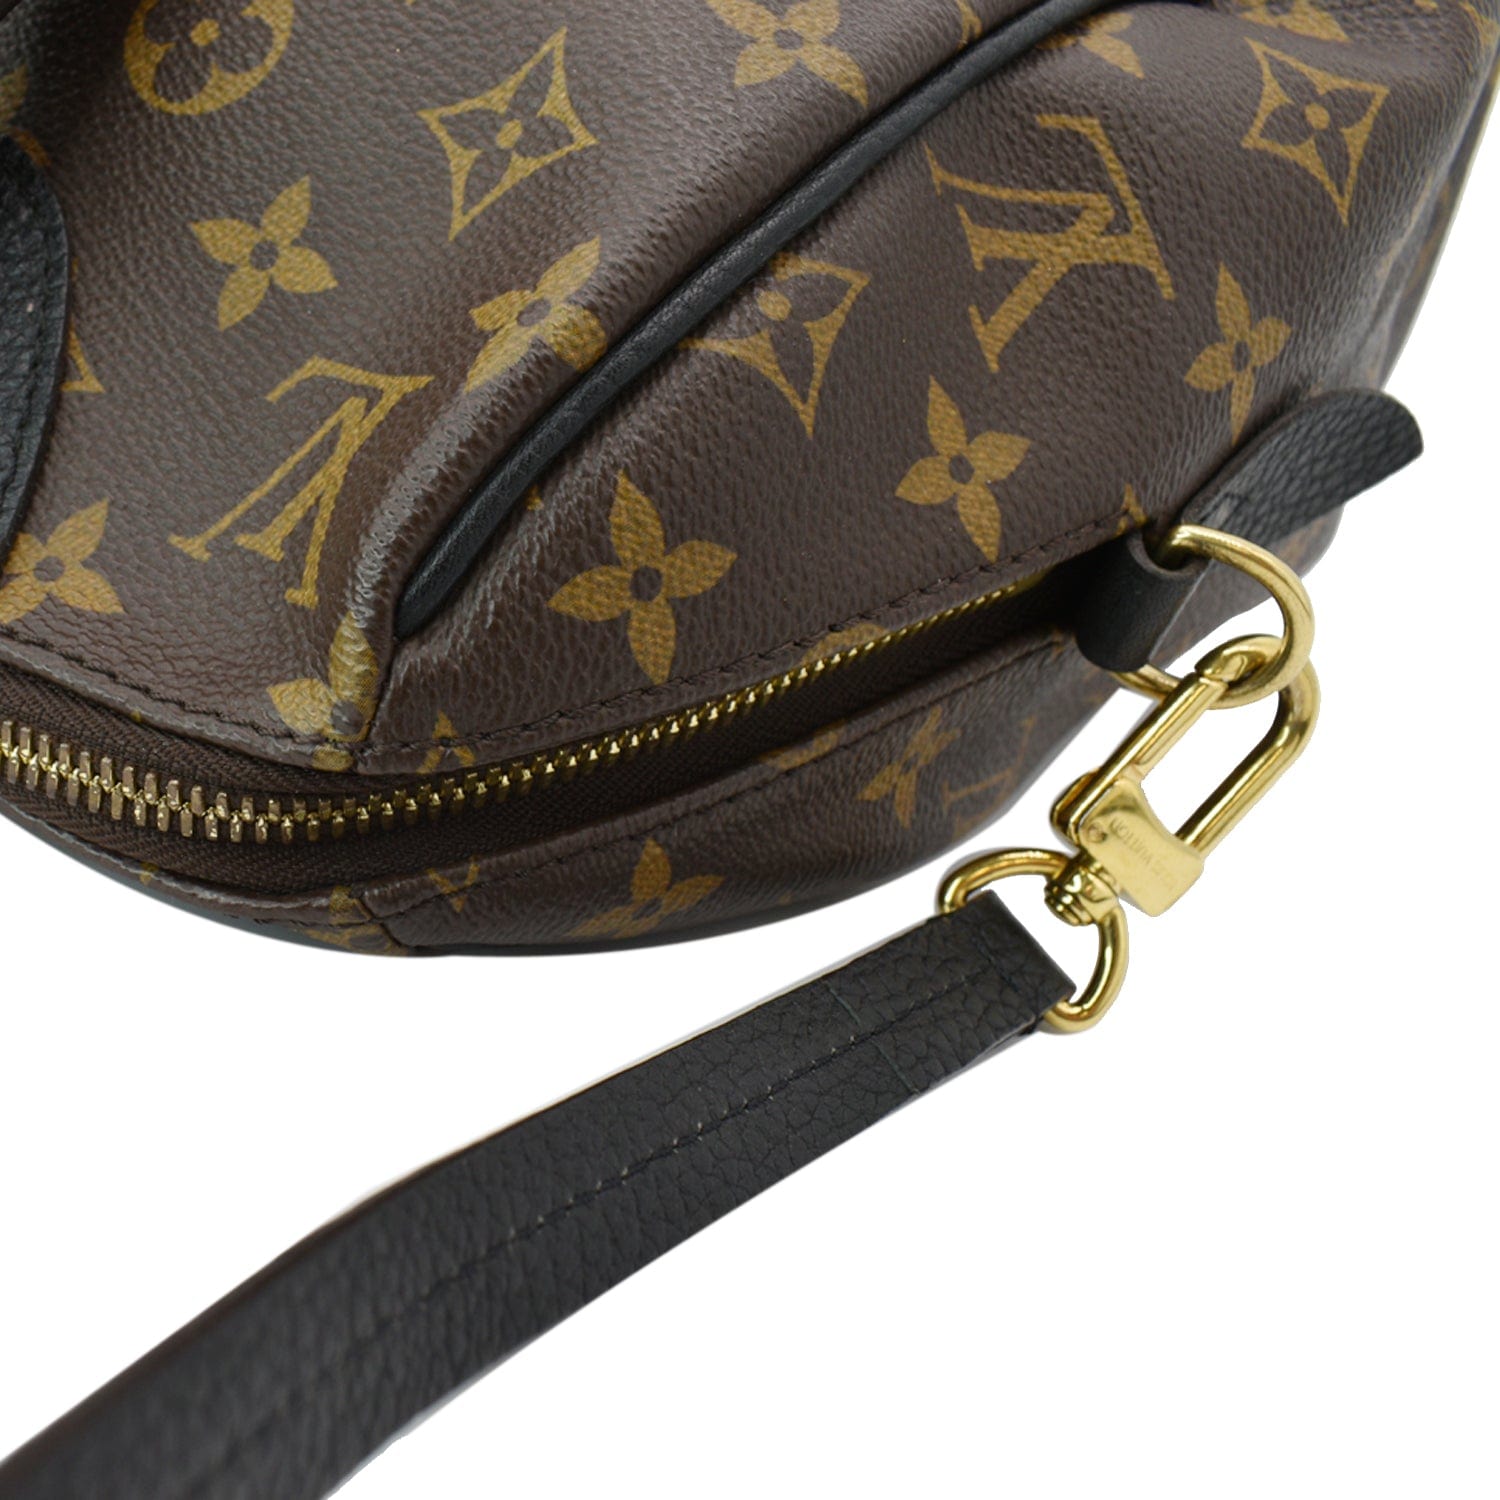 Authentic Louis Vuitton Monogram Noir Retiro NM Handbag/Shoulder